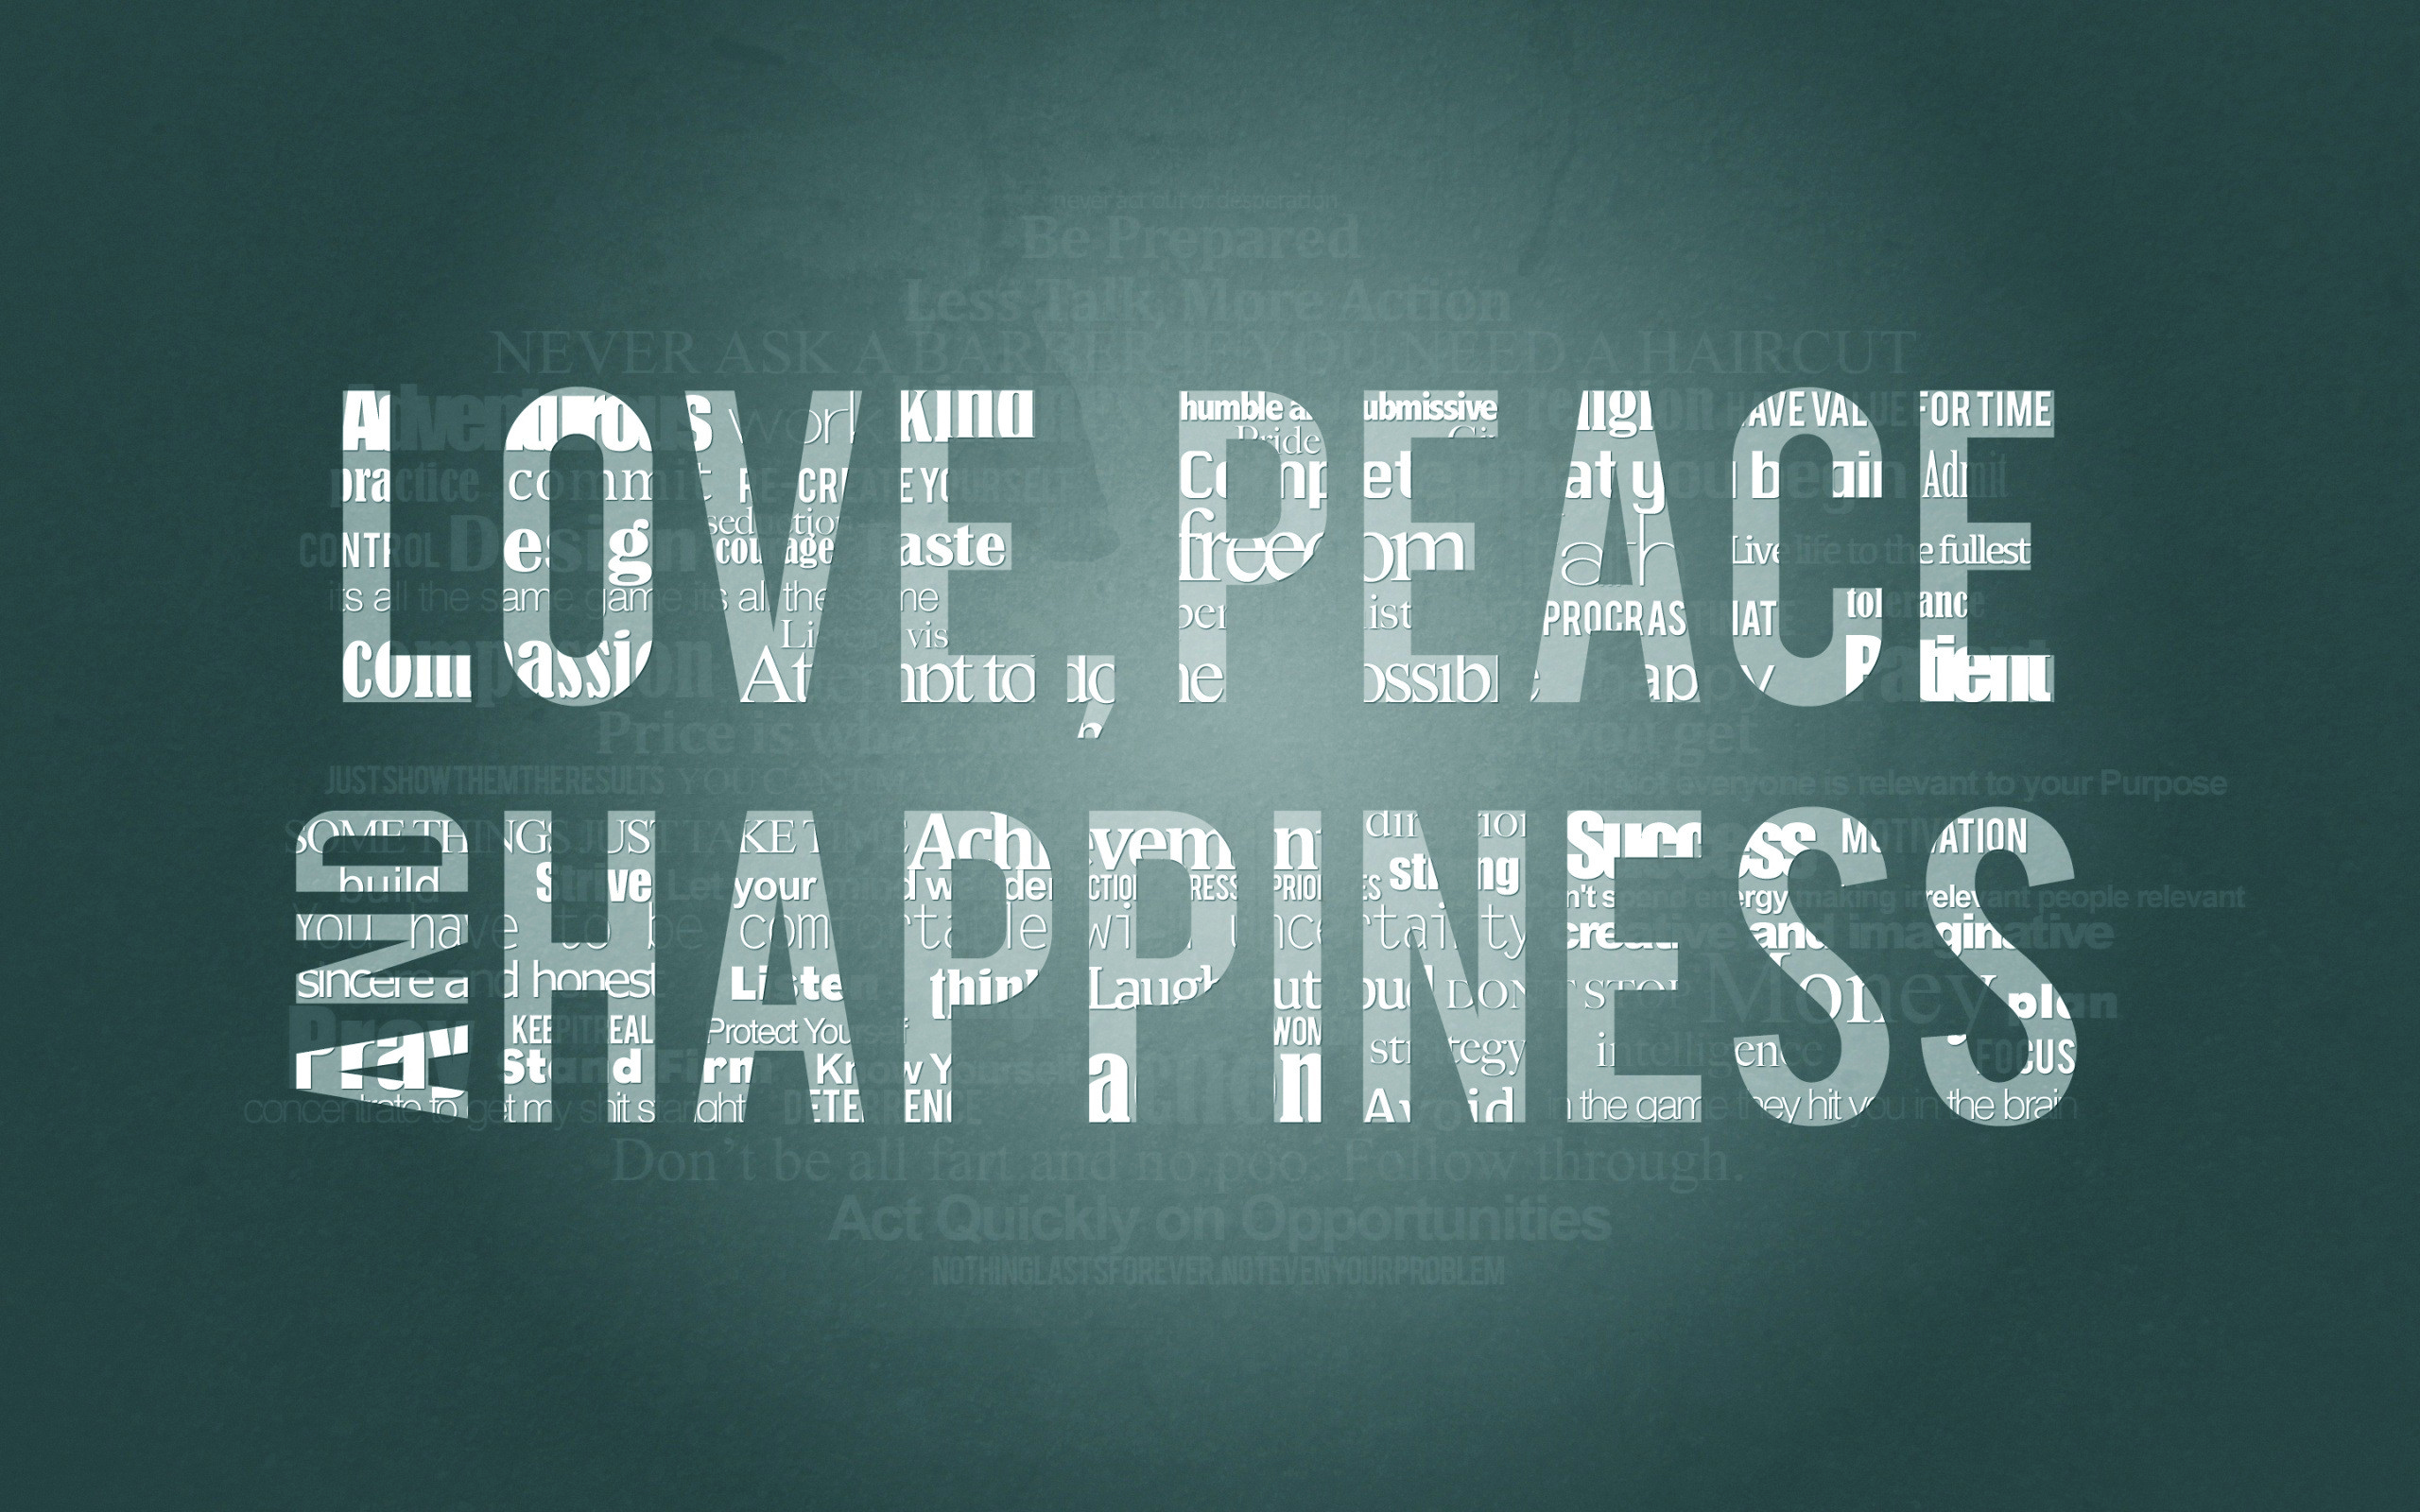 Love peace happiness